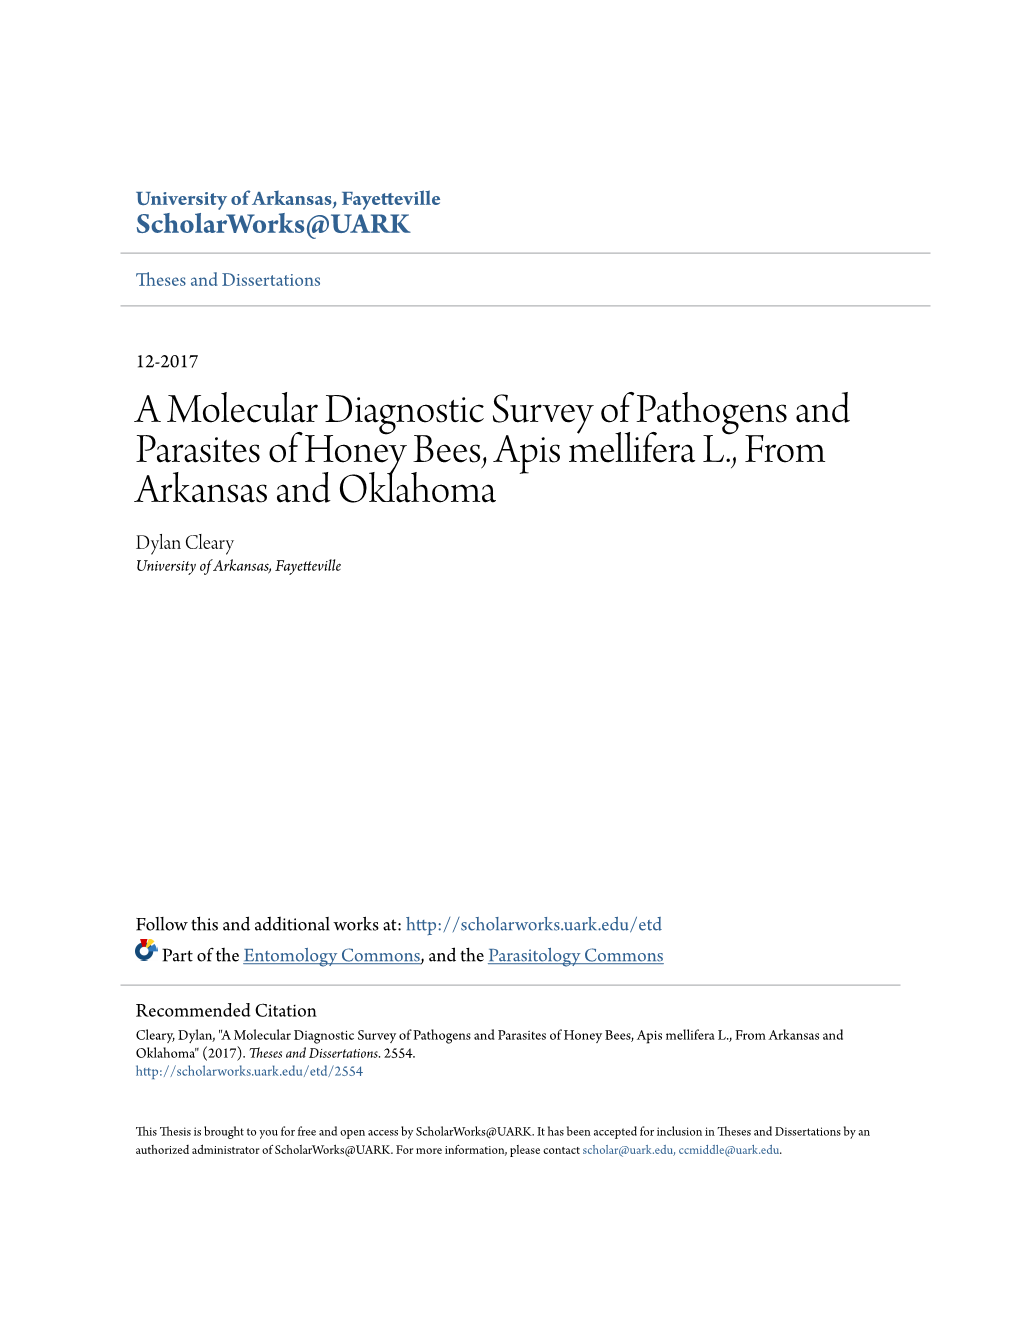 A Molecular Diagnostic Survey of Pathogens and Parasites of Honey Bees, Apis Mellifera L., from Arkansas and Oklahoma